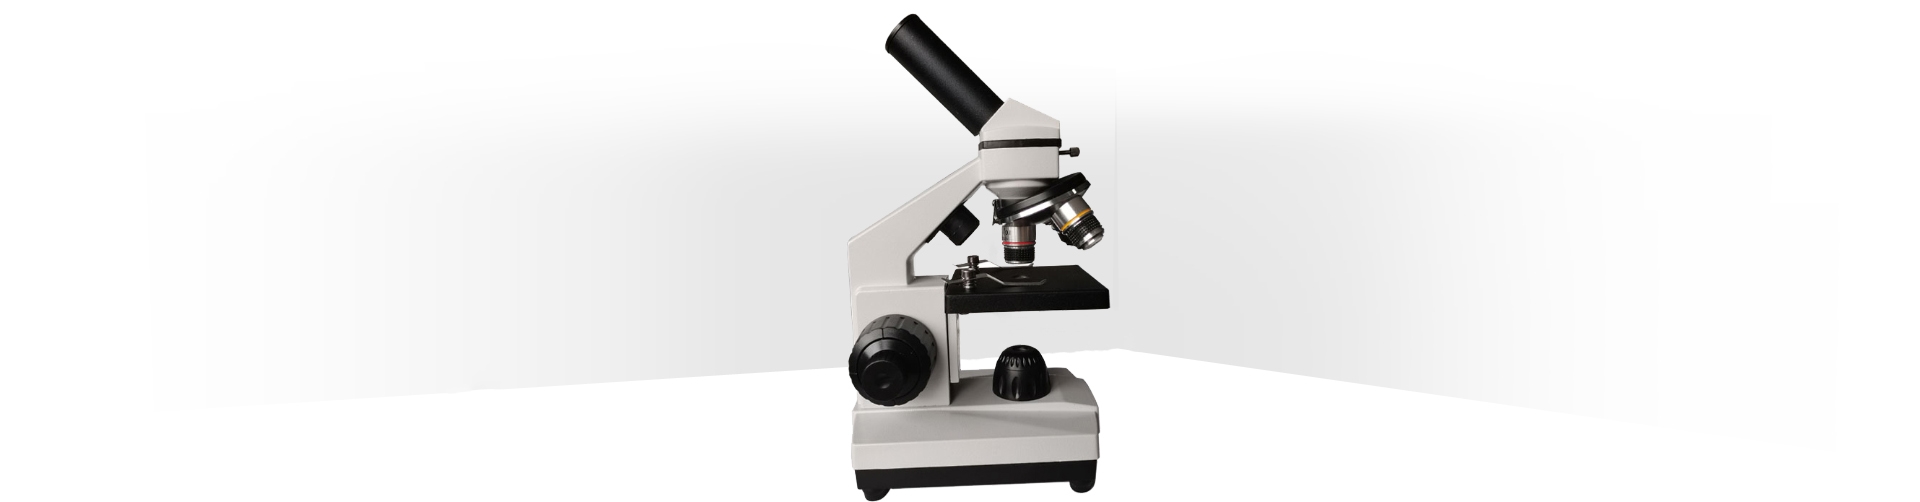 XSP-640单目学生显微镜